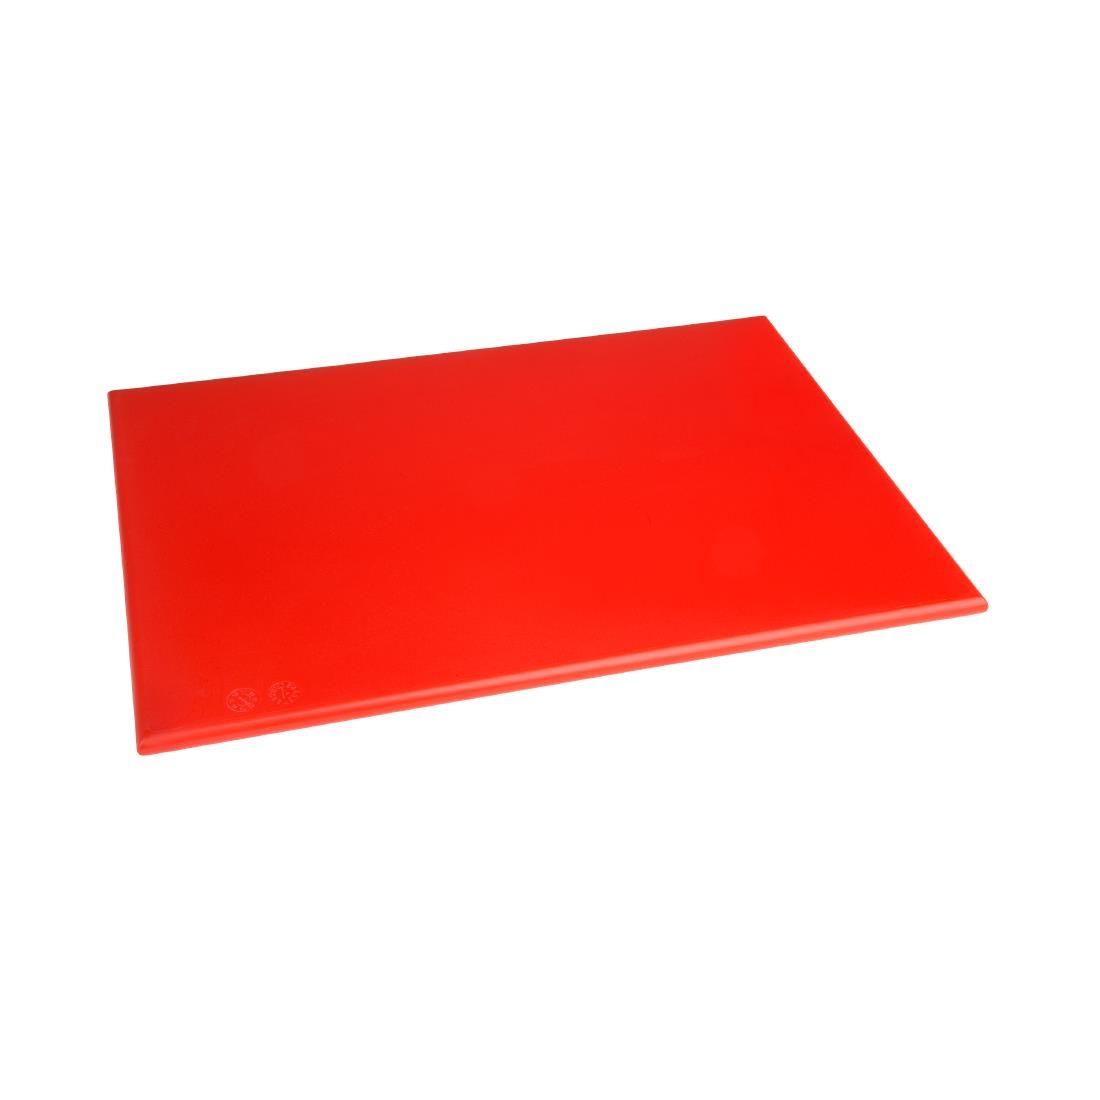 Hygiplas High Density Red Chopping Board Standard - J010  - 1